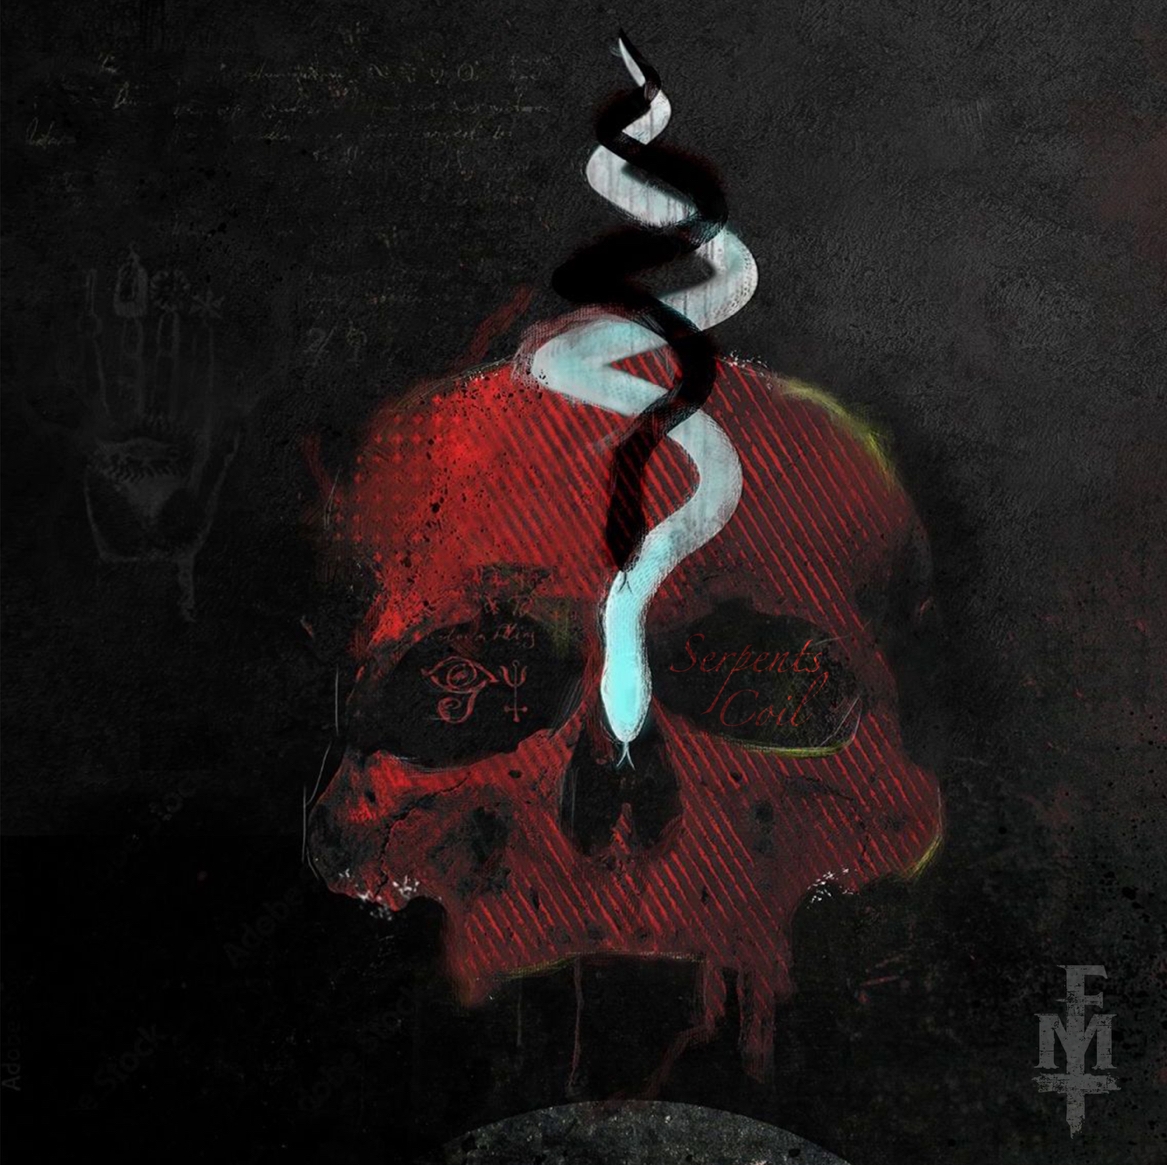  “Serpents Coil” de Fates Messenger: Metalcore Revitalizado